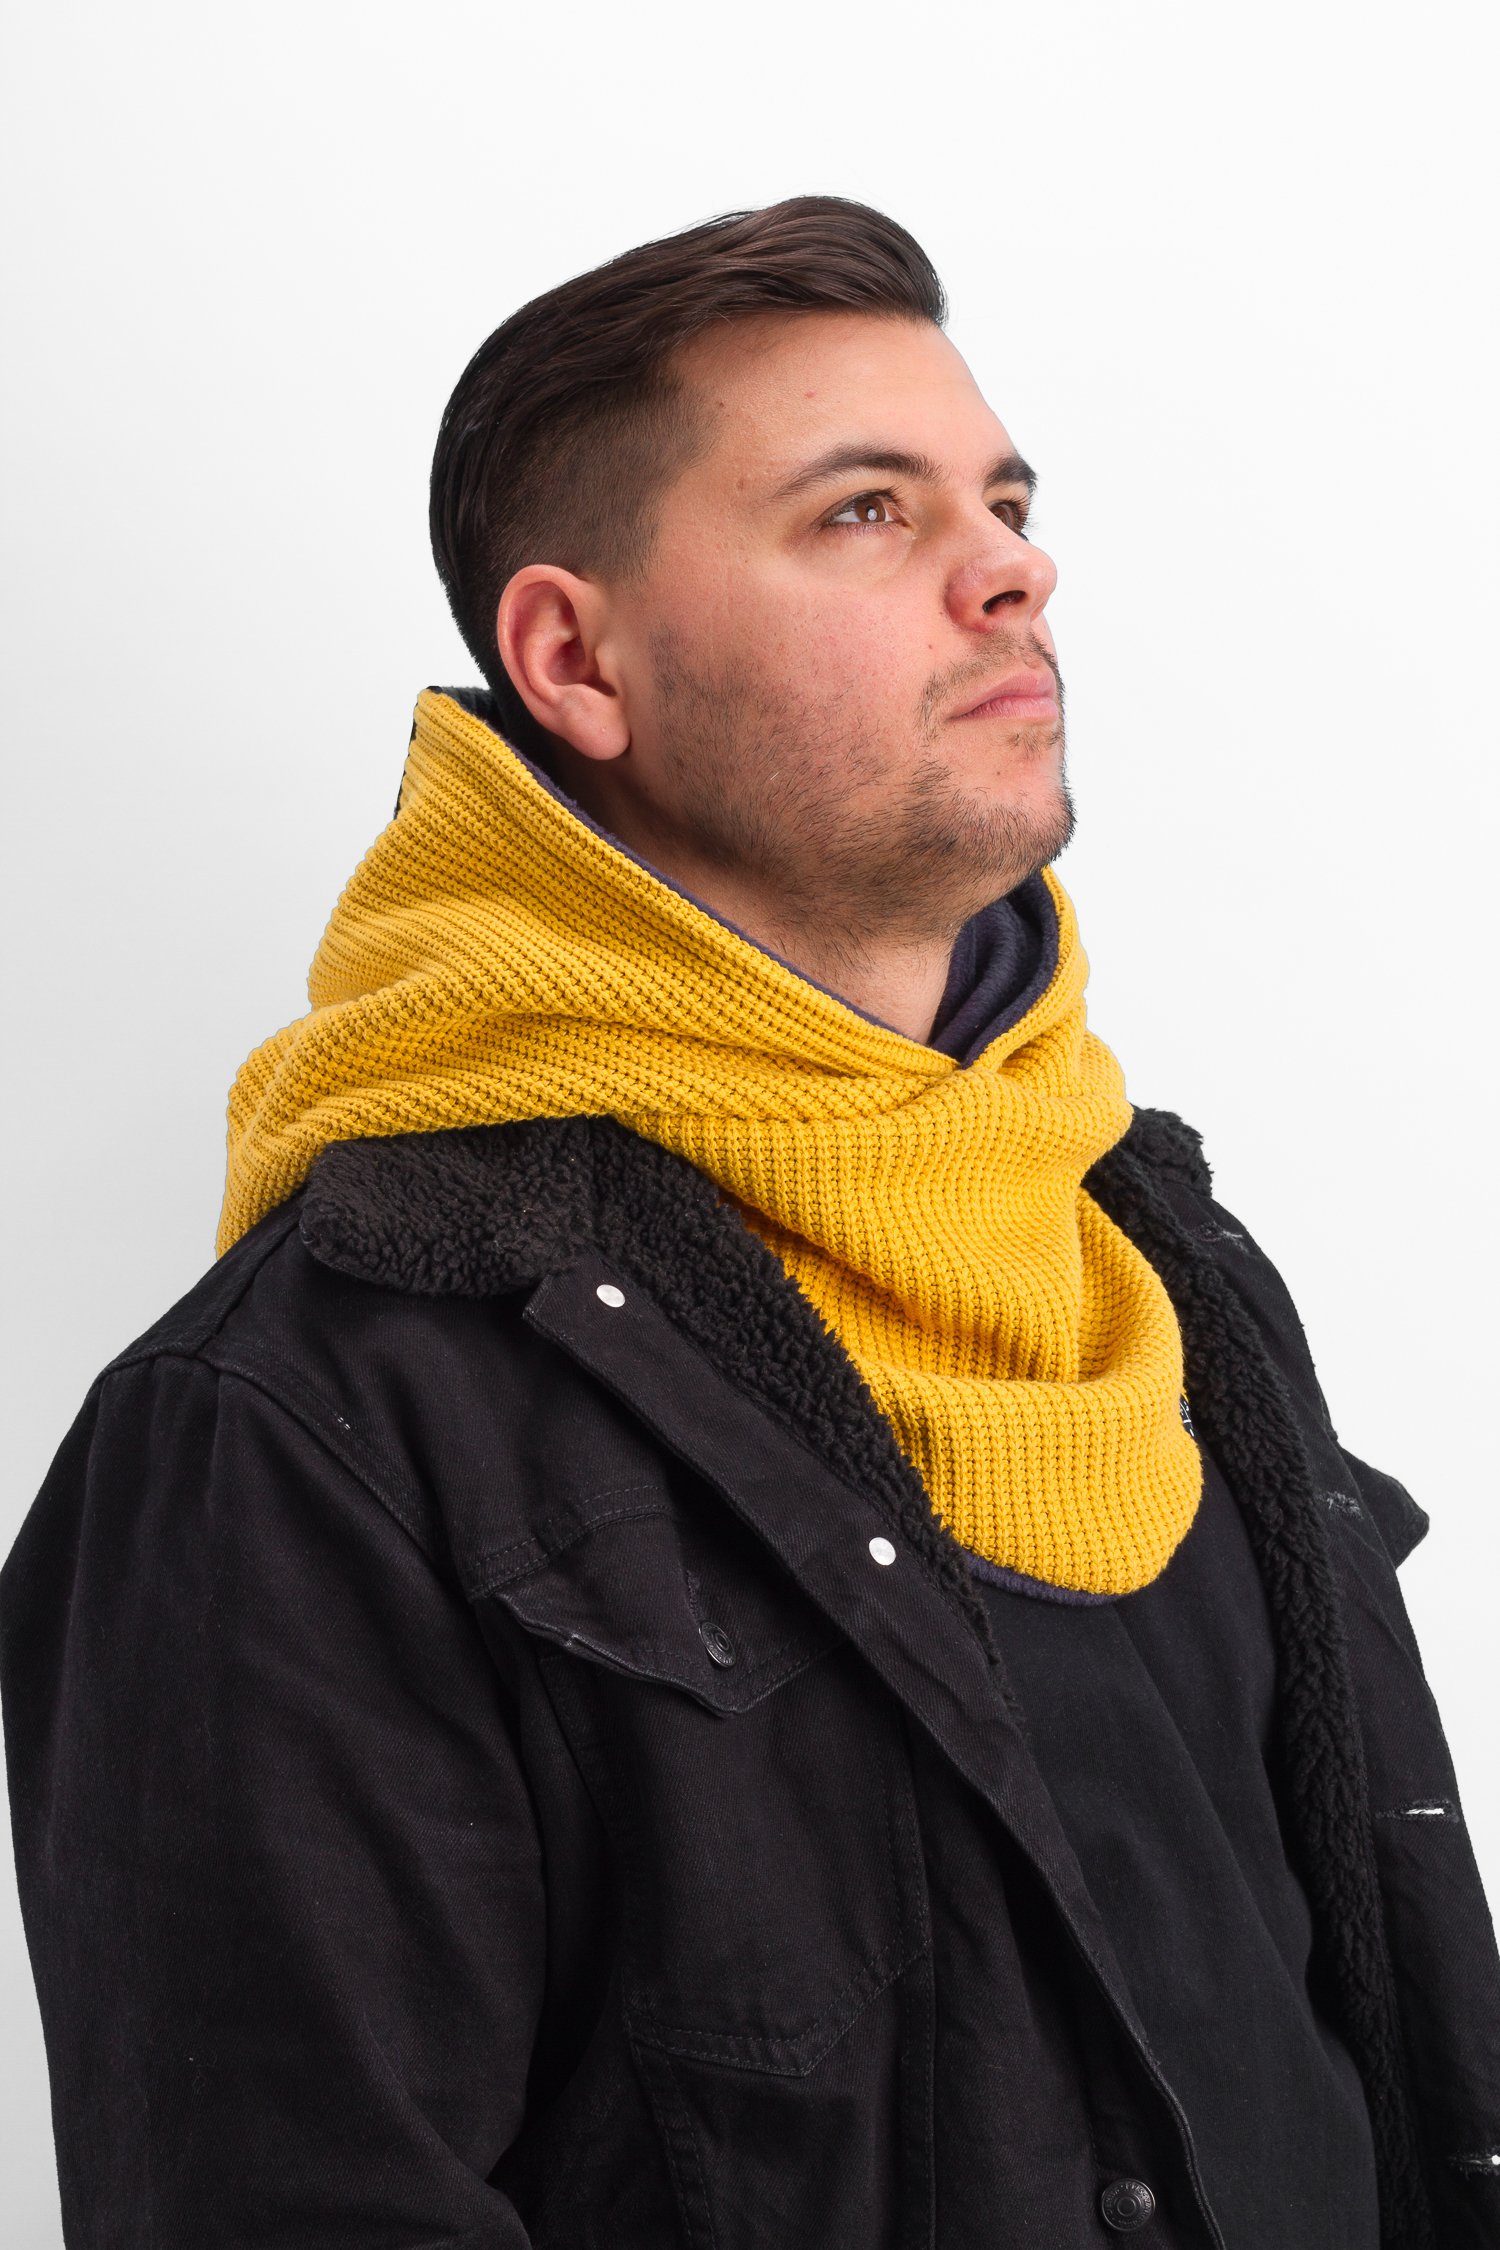 Windbreaker Modeschal - Schal, Hooded integriertem Manufaktur13 Knit Loop Mustard Strickschal, Kapuzenschal, mit